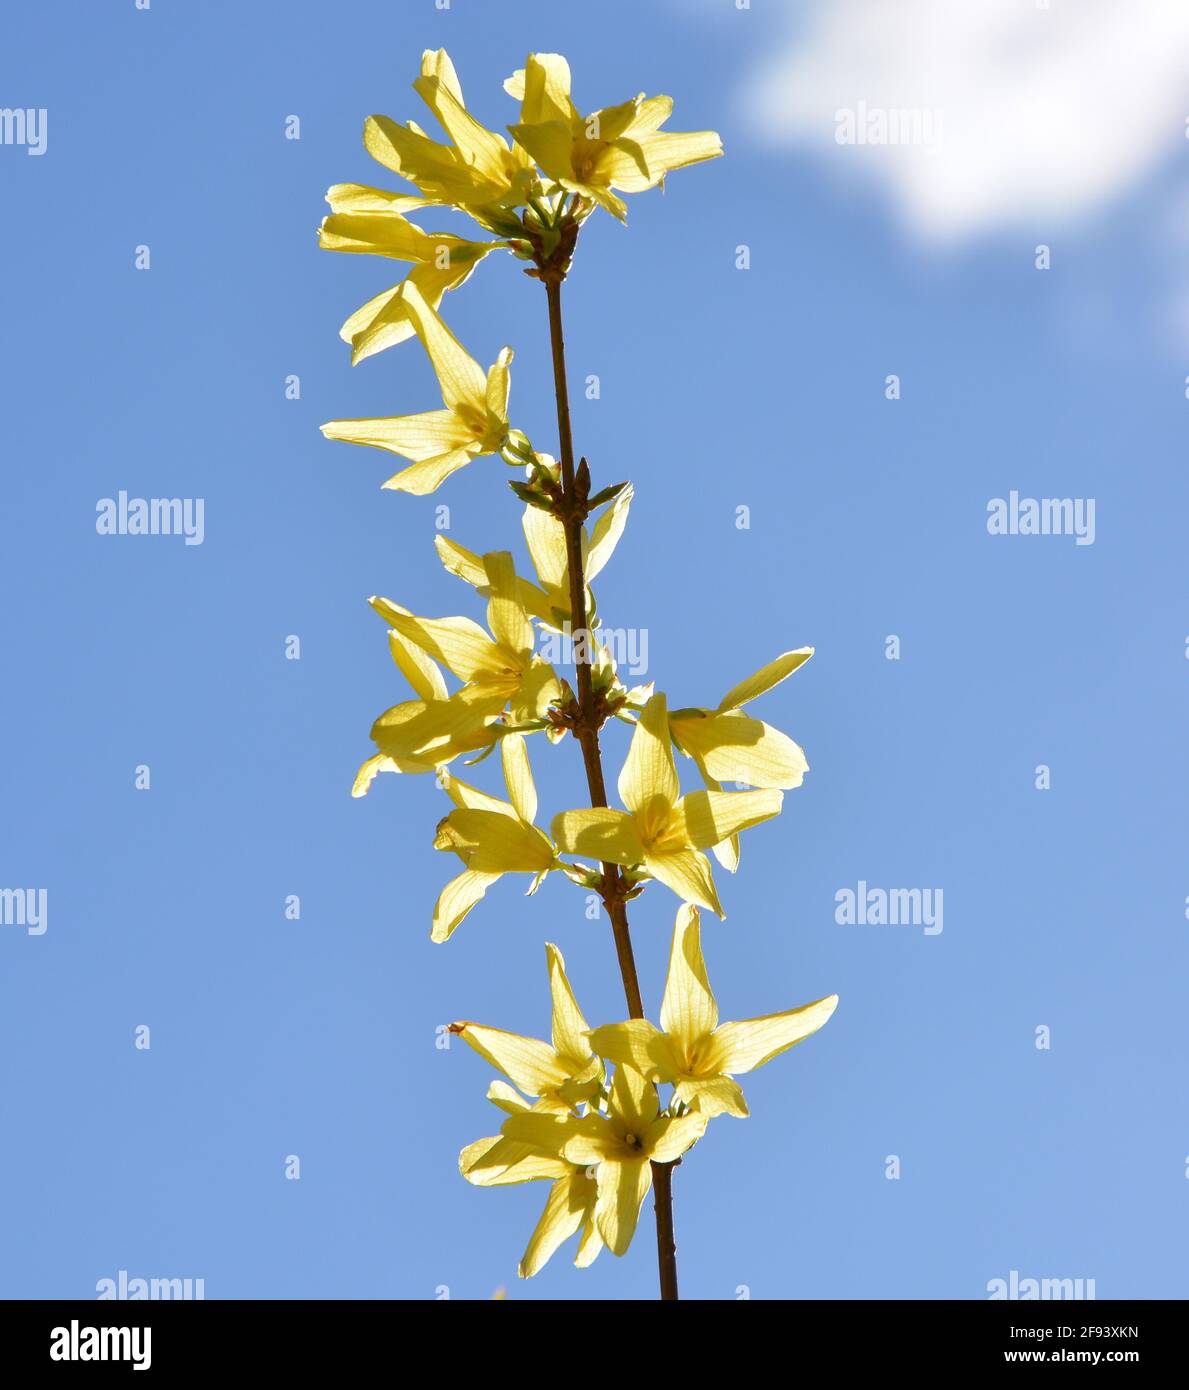 Forsythia flowers against blue sky High Resolution, Blooming bright yellow forsythia (Forsythia suspensa) Stock Photo, DSLR Stock Photo